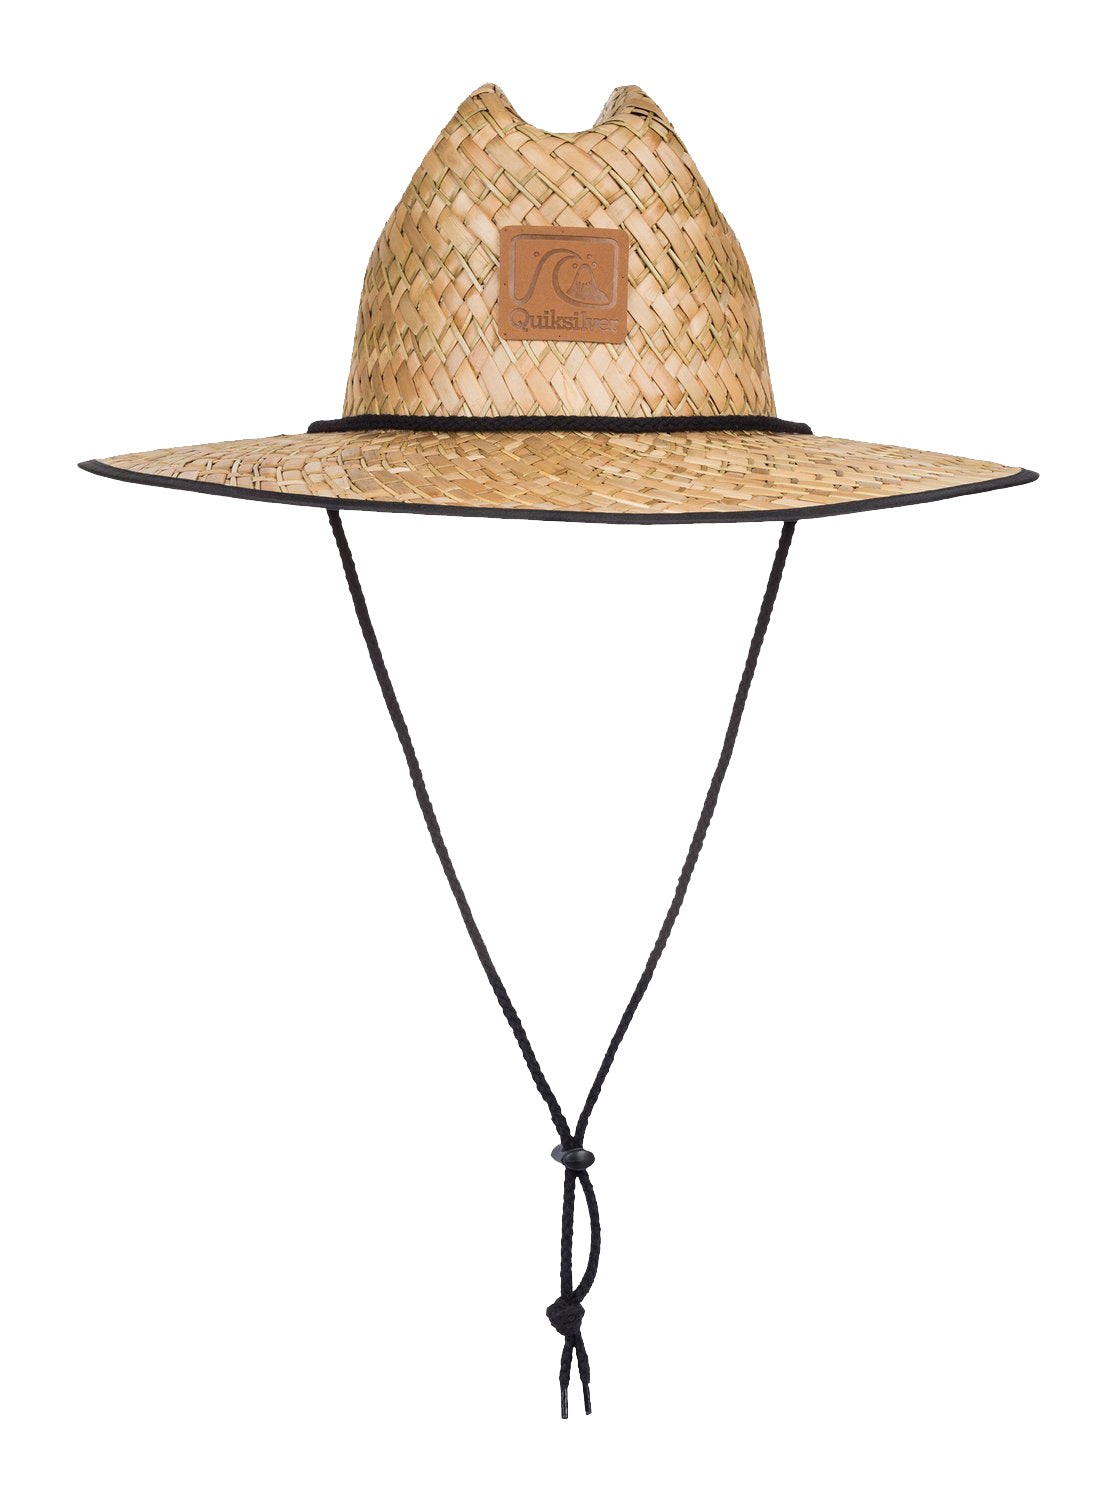 Quiksilver Outsider Straw Lifeguard Hat BGZ0 L/XL